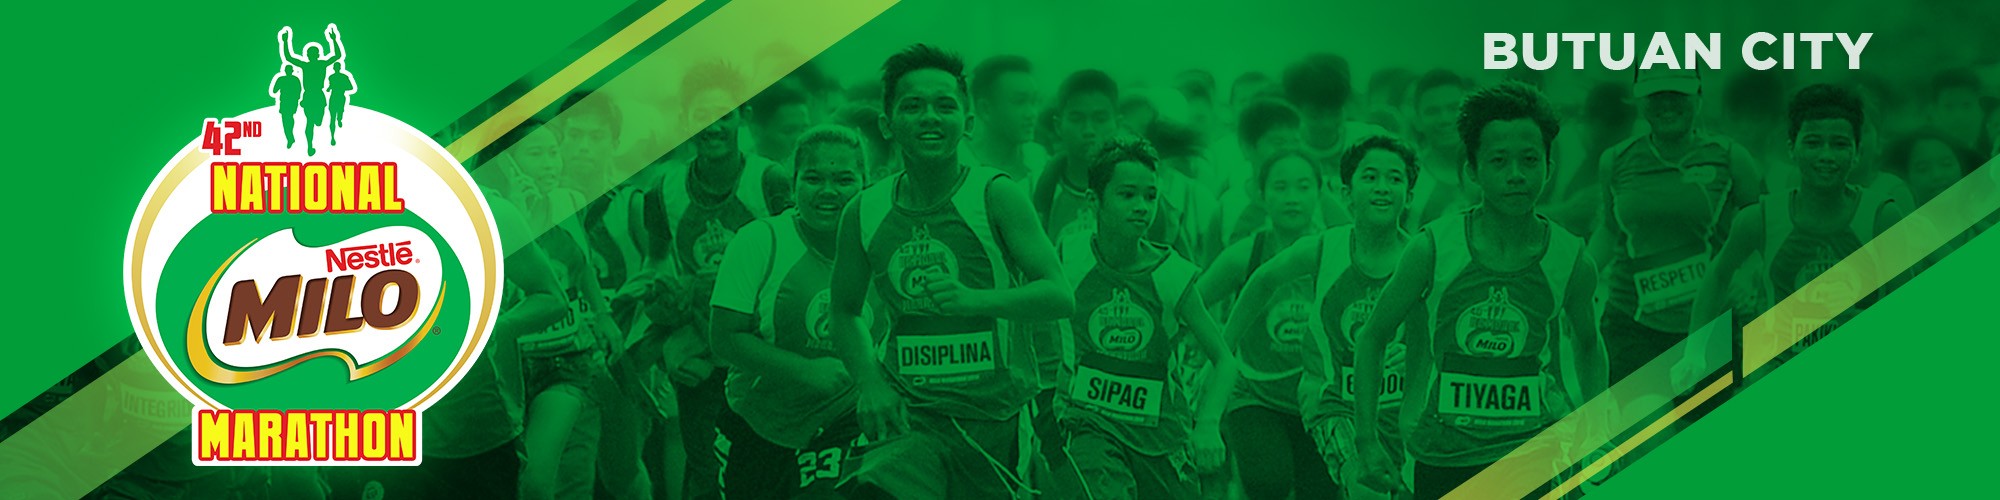 42nd National MILO Marathon - Butuan Leg